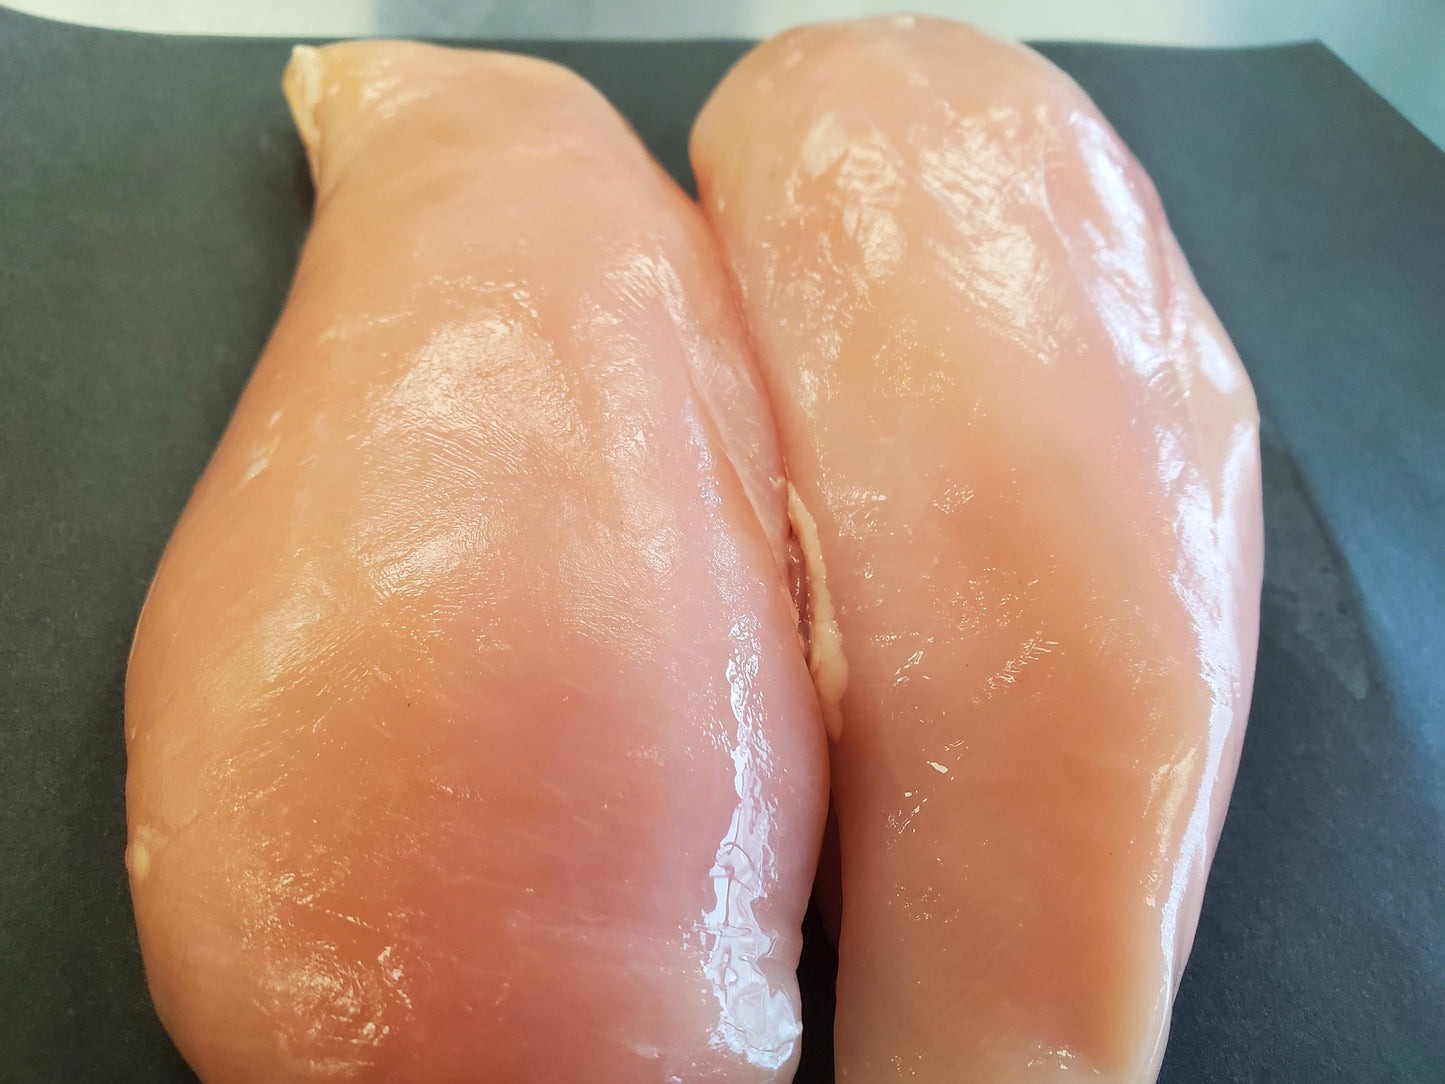 Pastured Boneless Skinless Chicken Breasts (pack of 2)